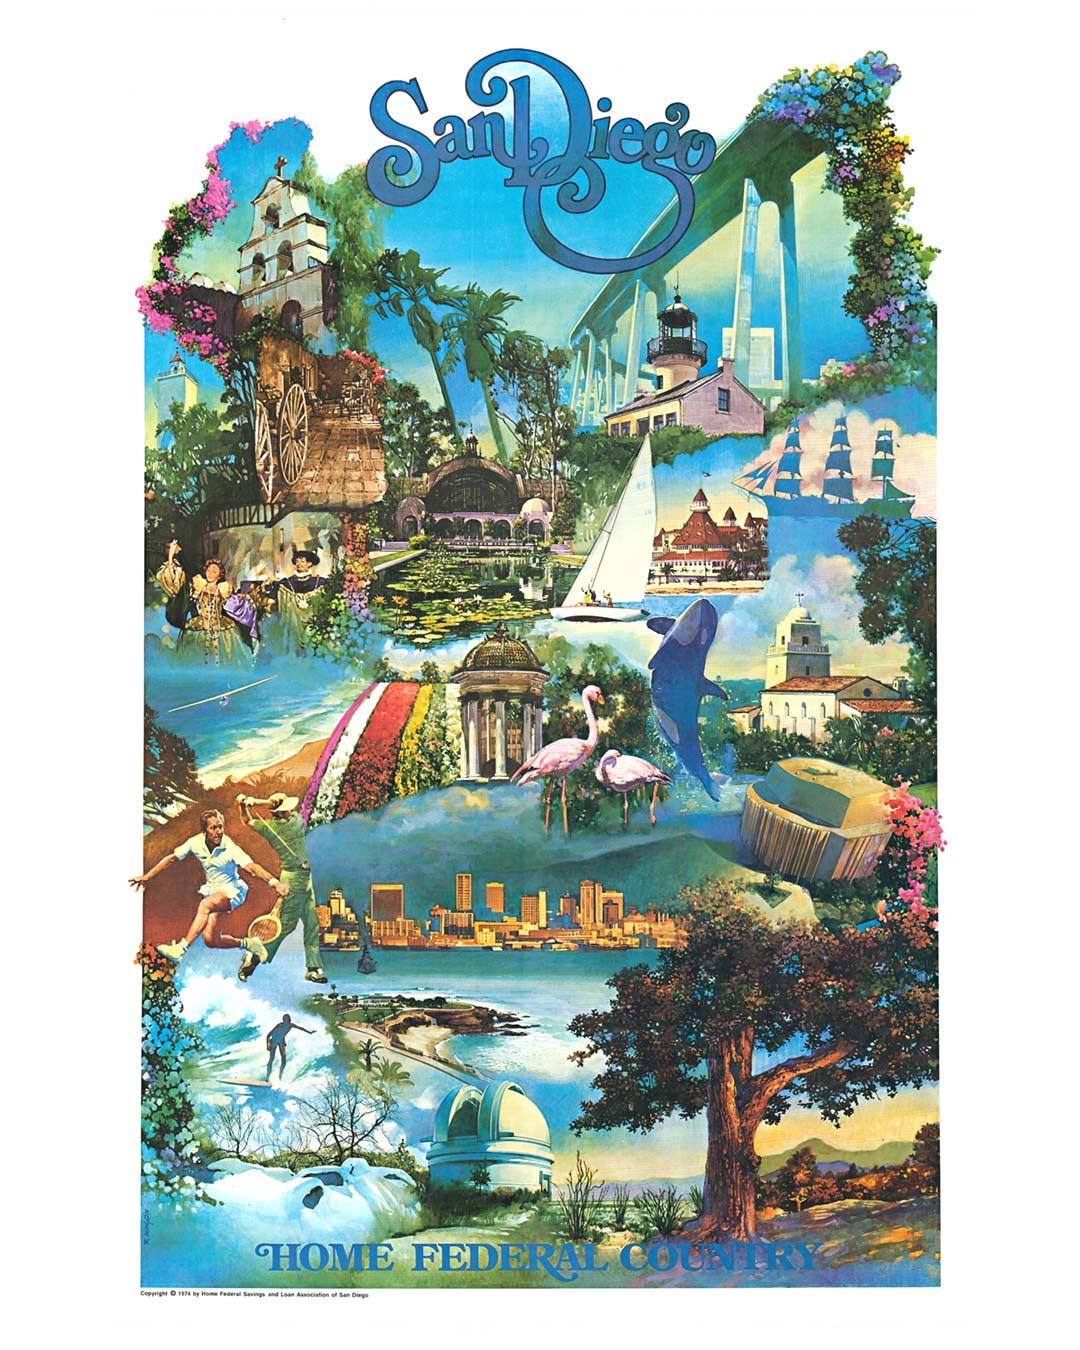 Original San Diego (Home Federal) 1974 vintage poster - Print by Robert Kinyon